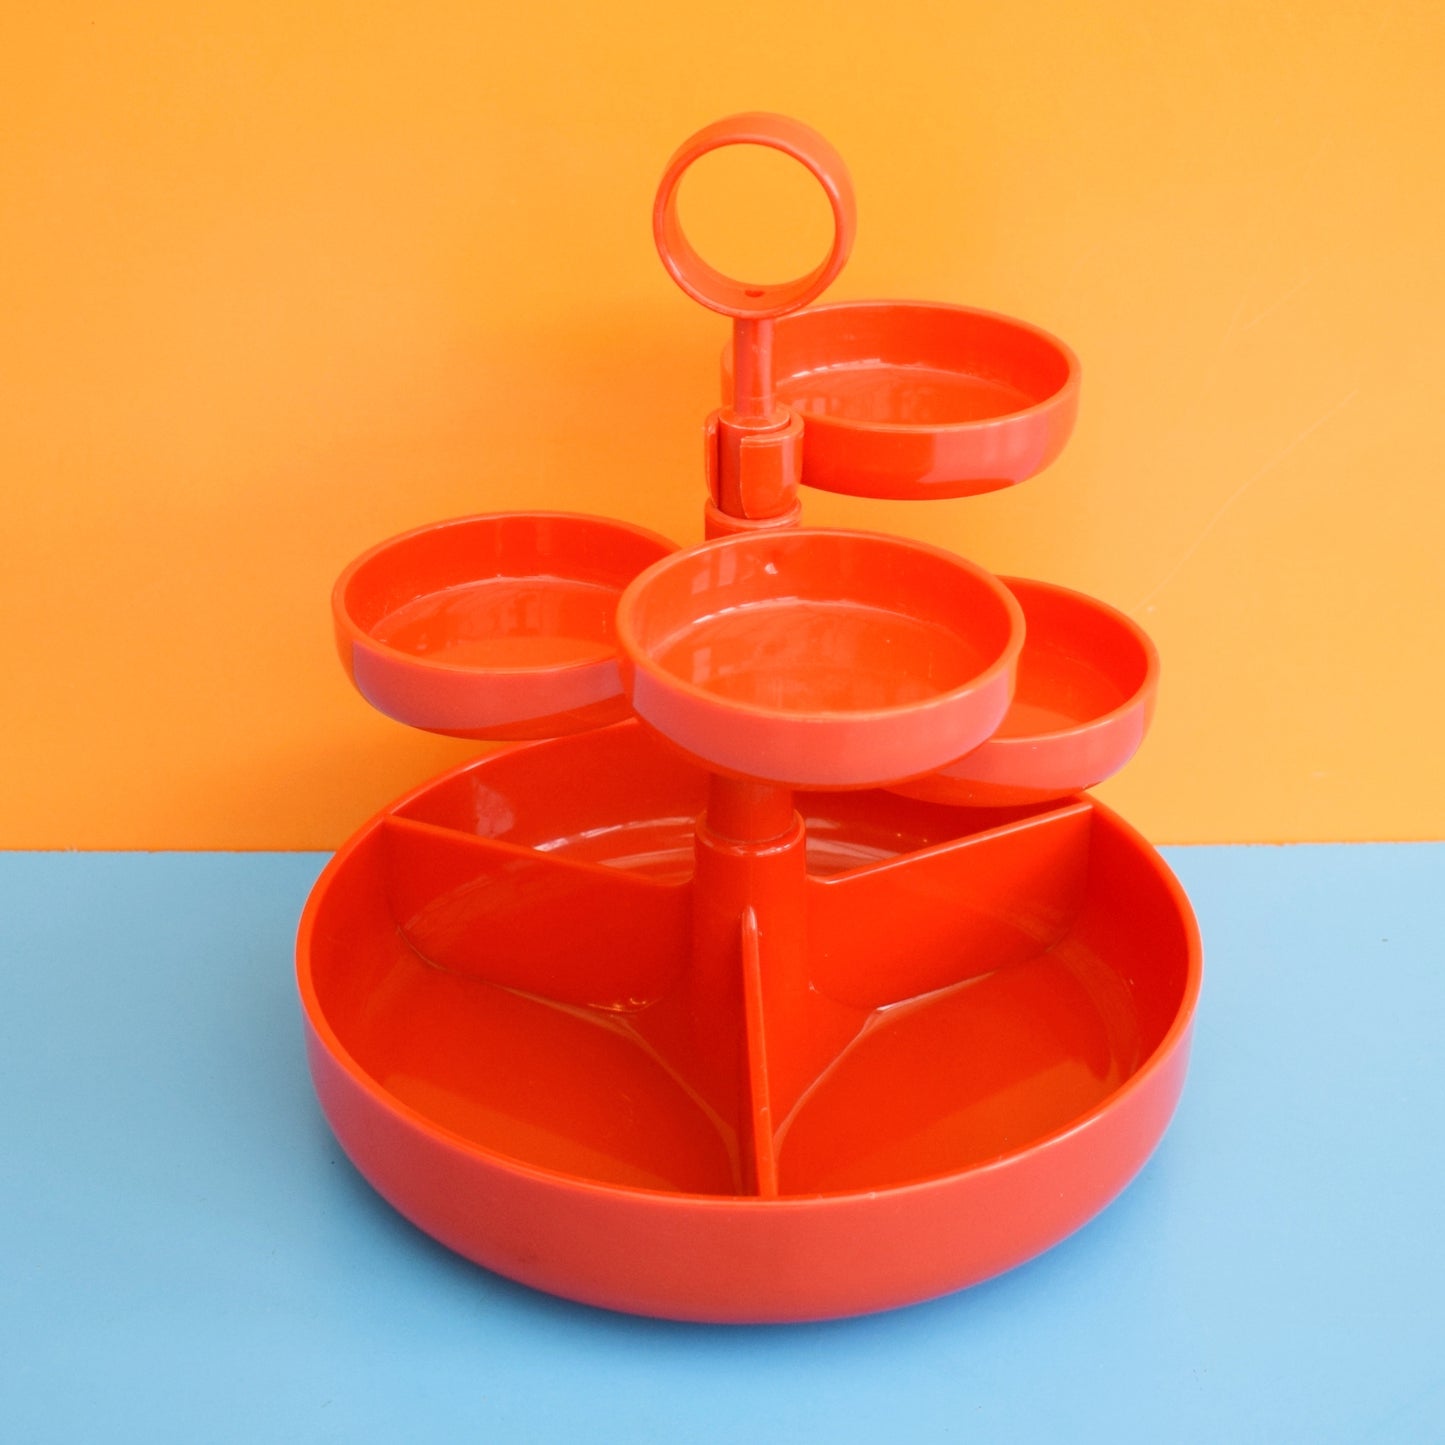 Vintage 1970s Plastic Party Snack Set - Orange